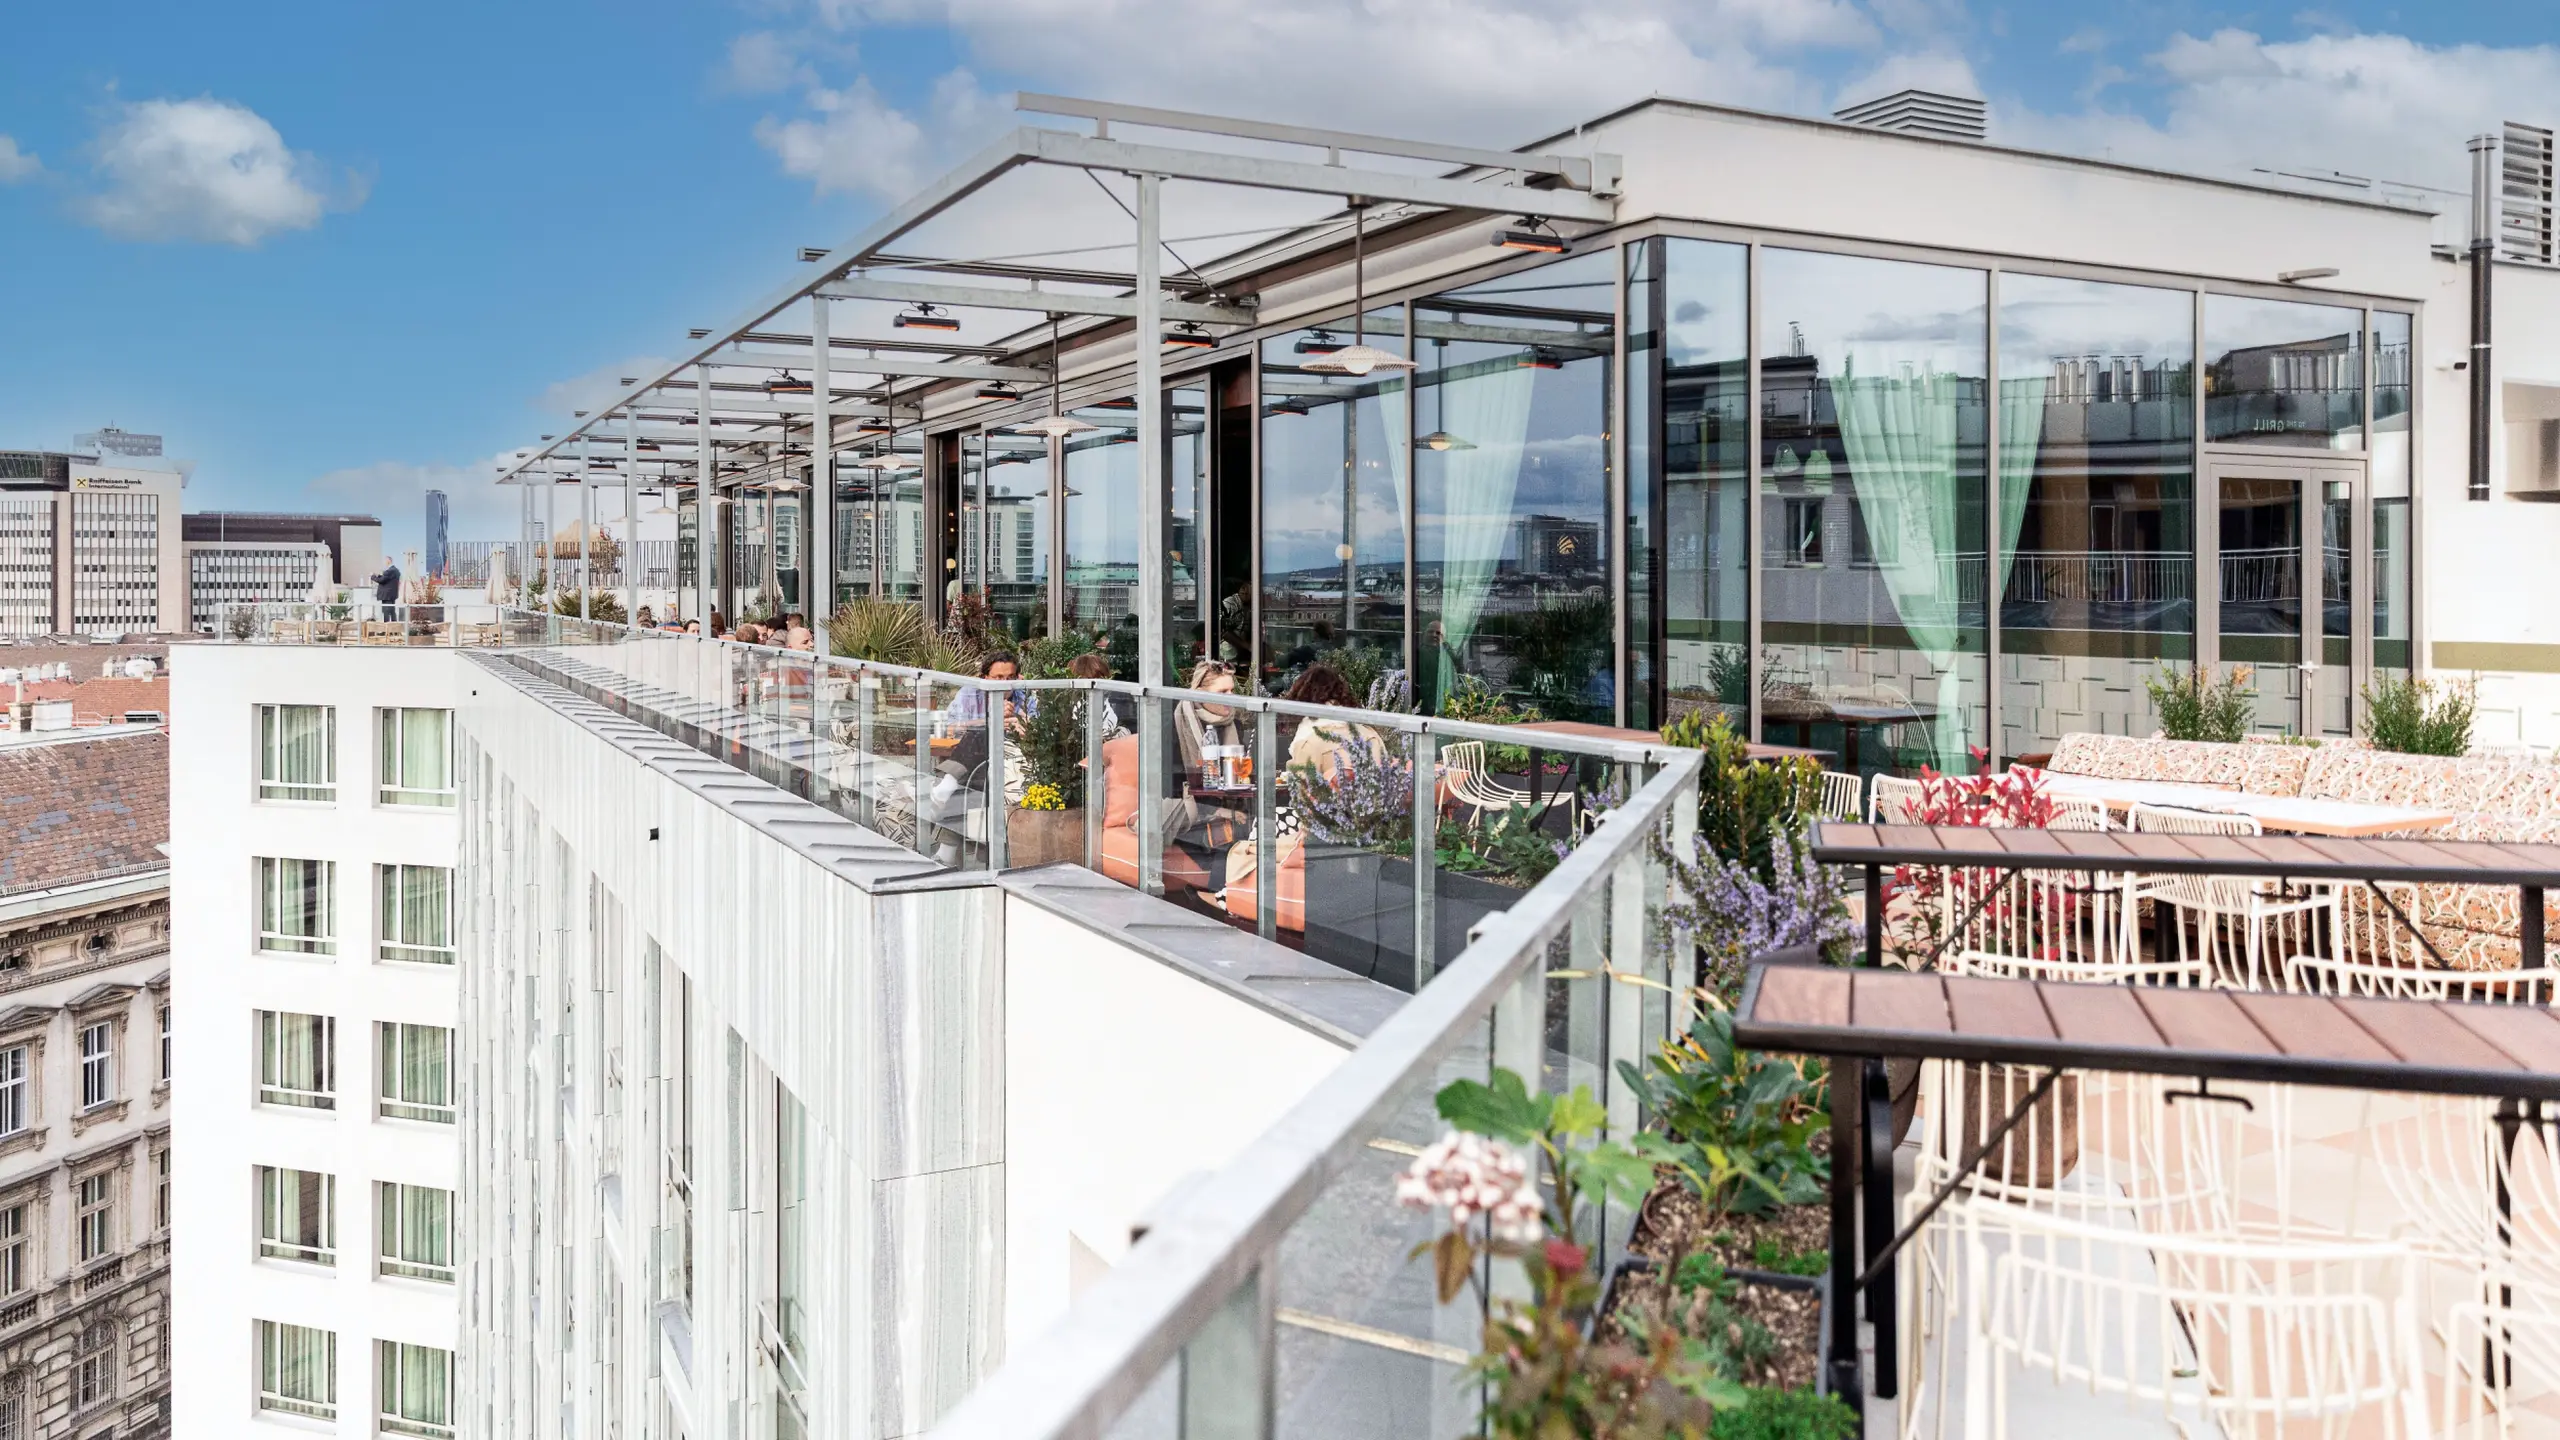 Das Open-House-Hotel "The Hoxton" hat in Wien eröffnet